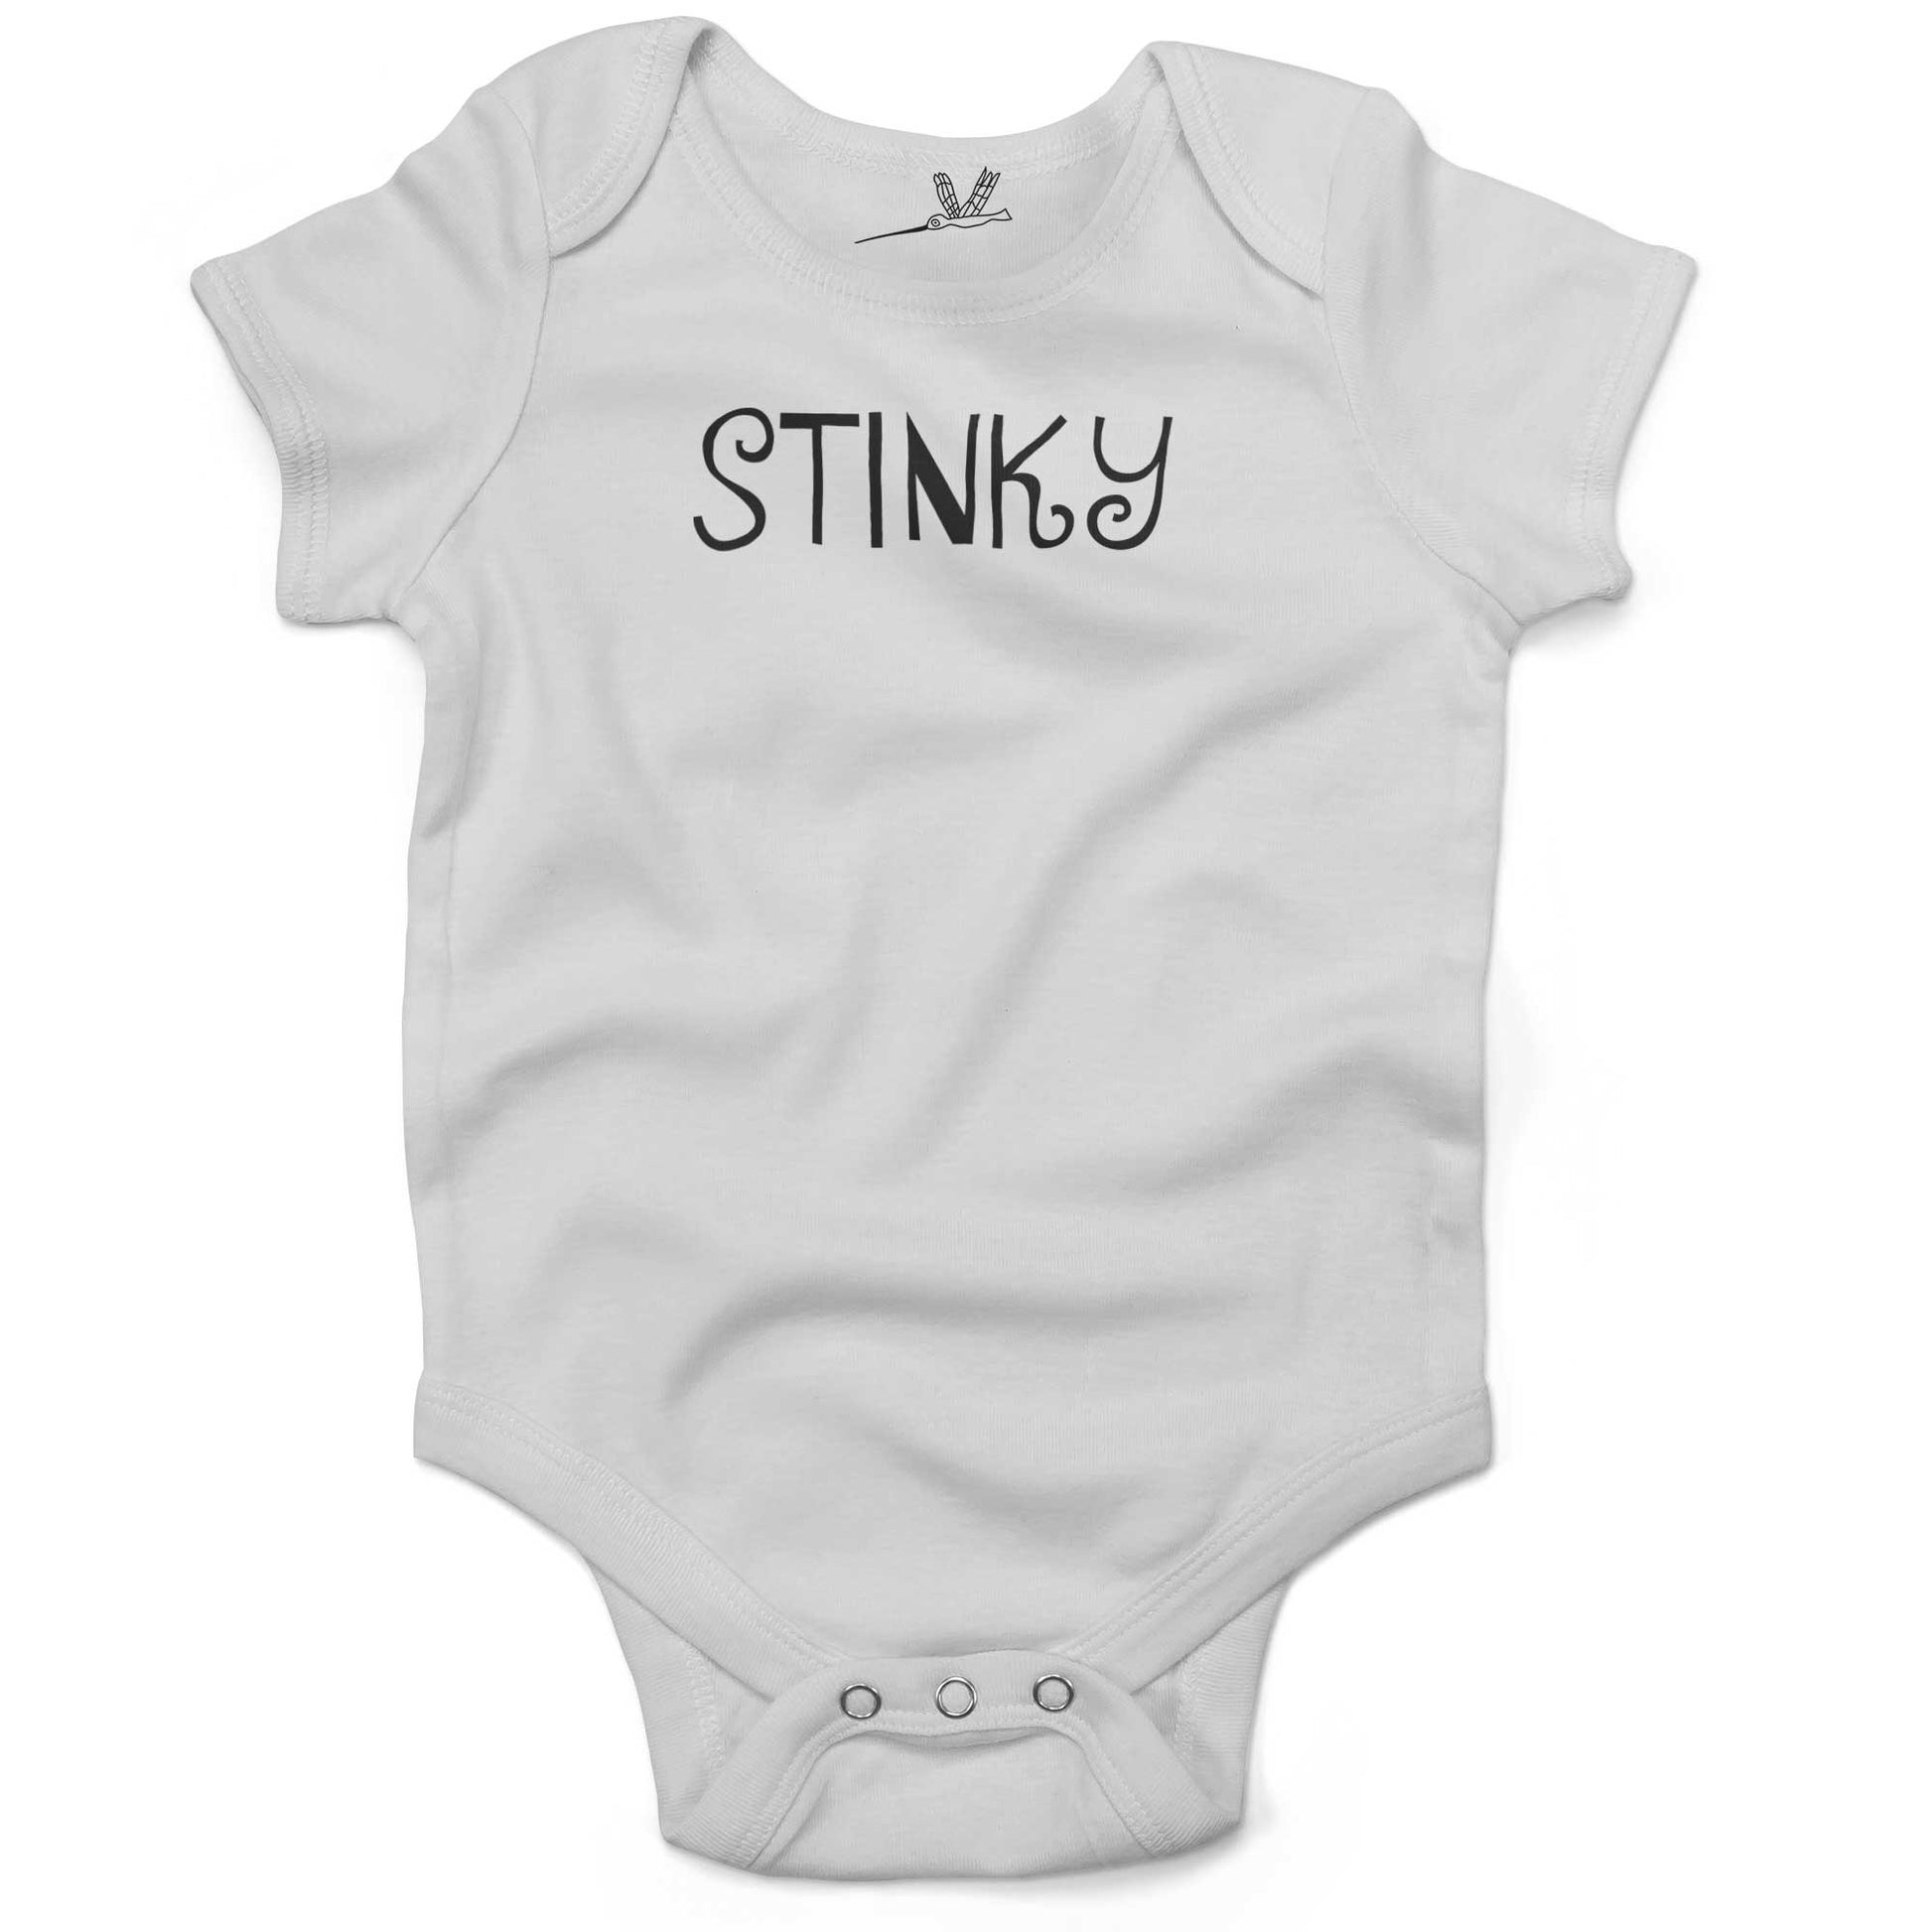 Stinky Infant Bodysuit or Raglan Baby Tee-White-3-6 months